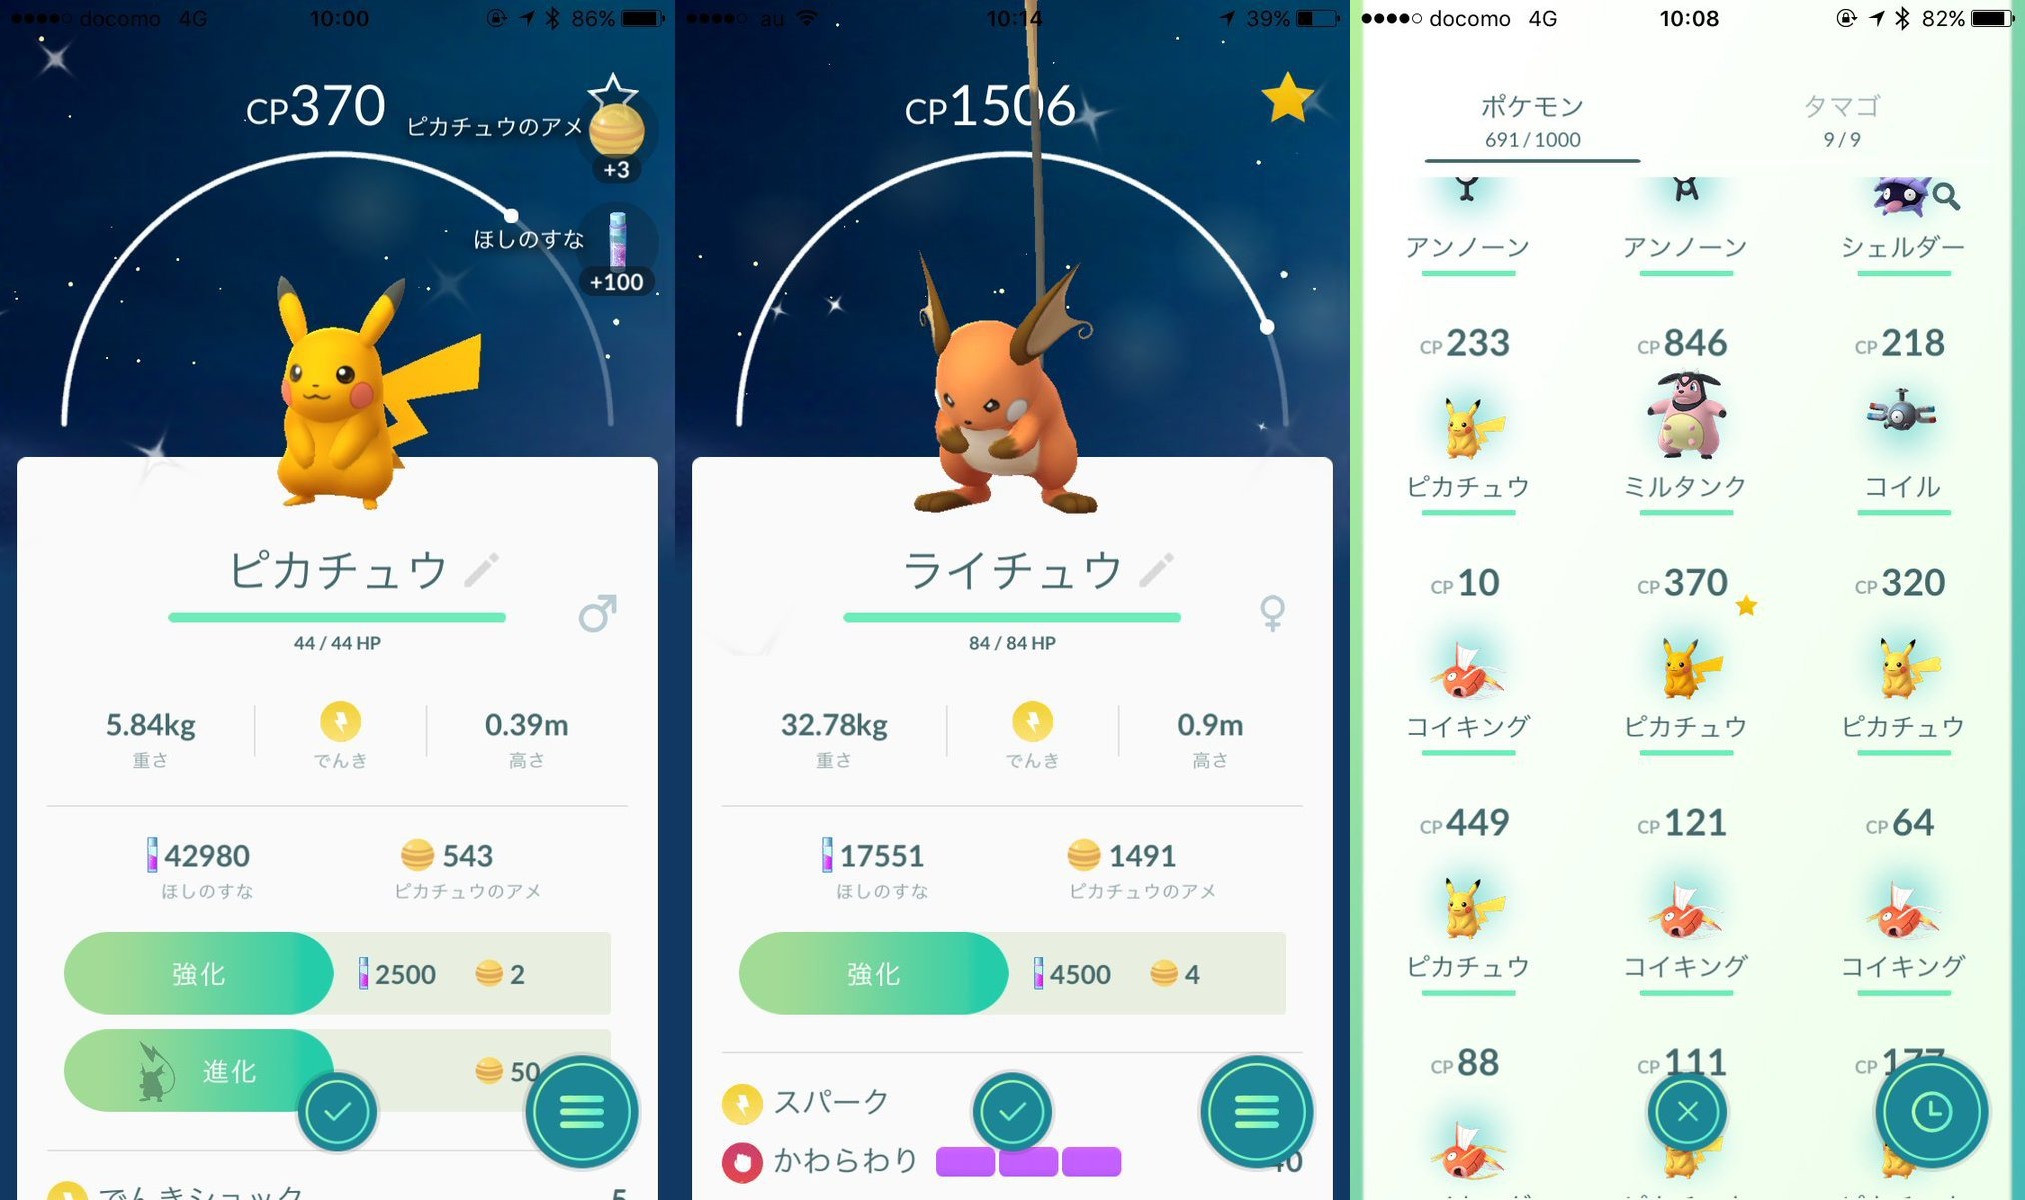 Shiny Pikachu Spotted At Japanese Pokemon Go Event